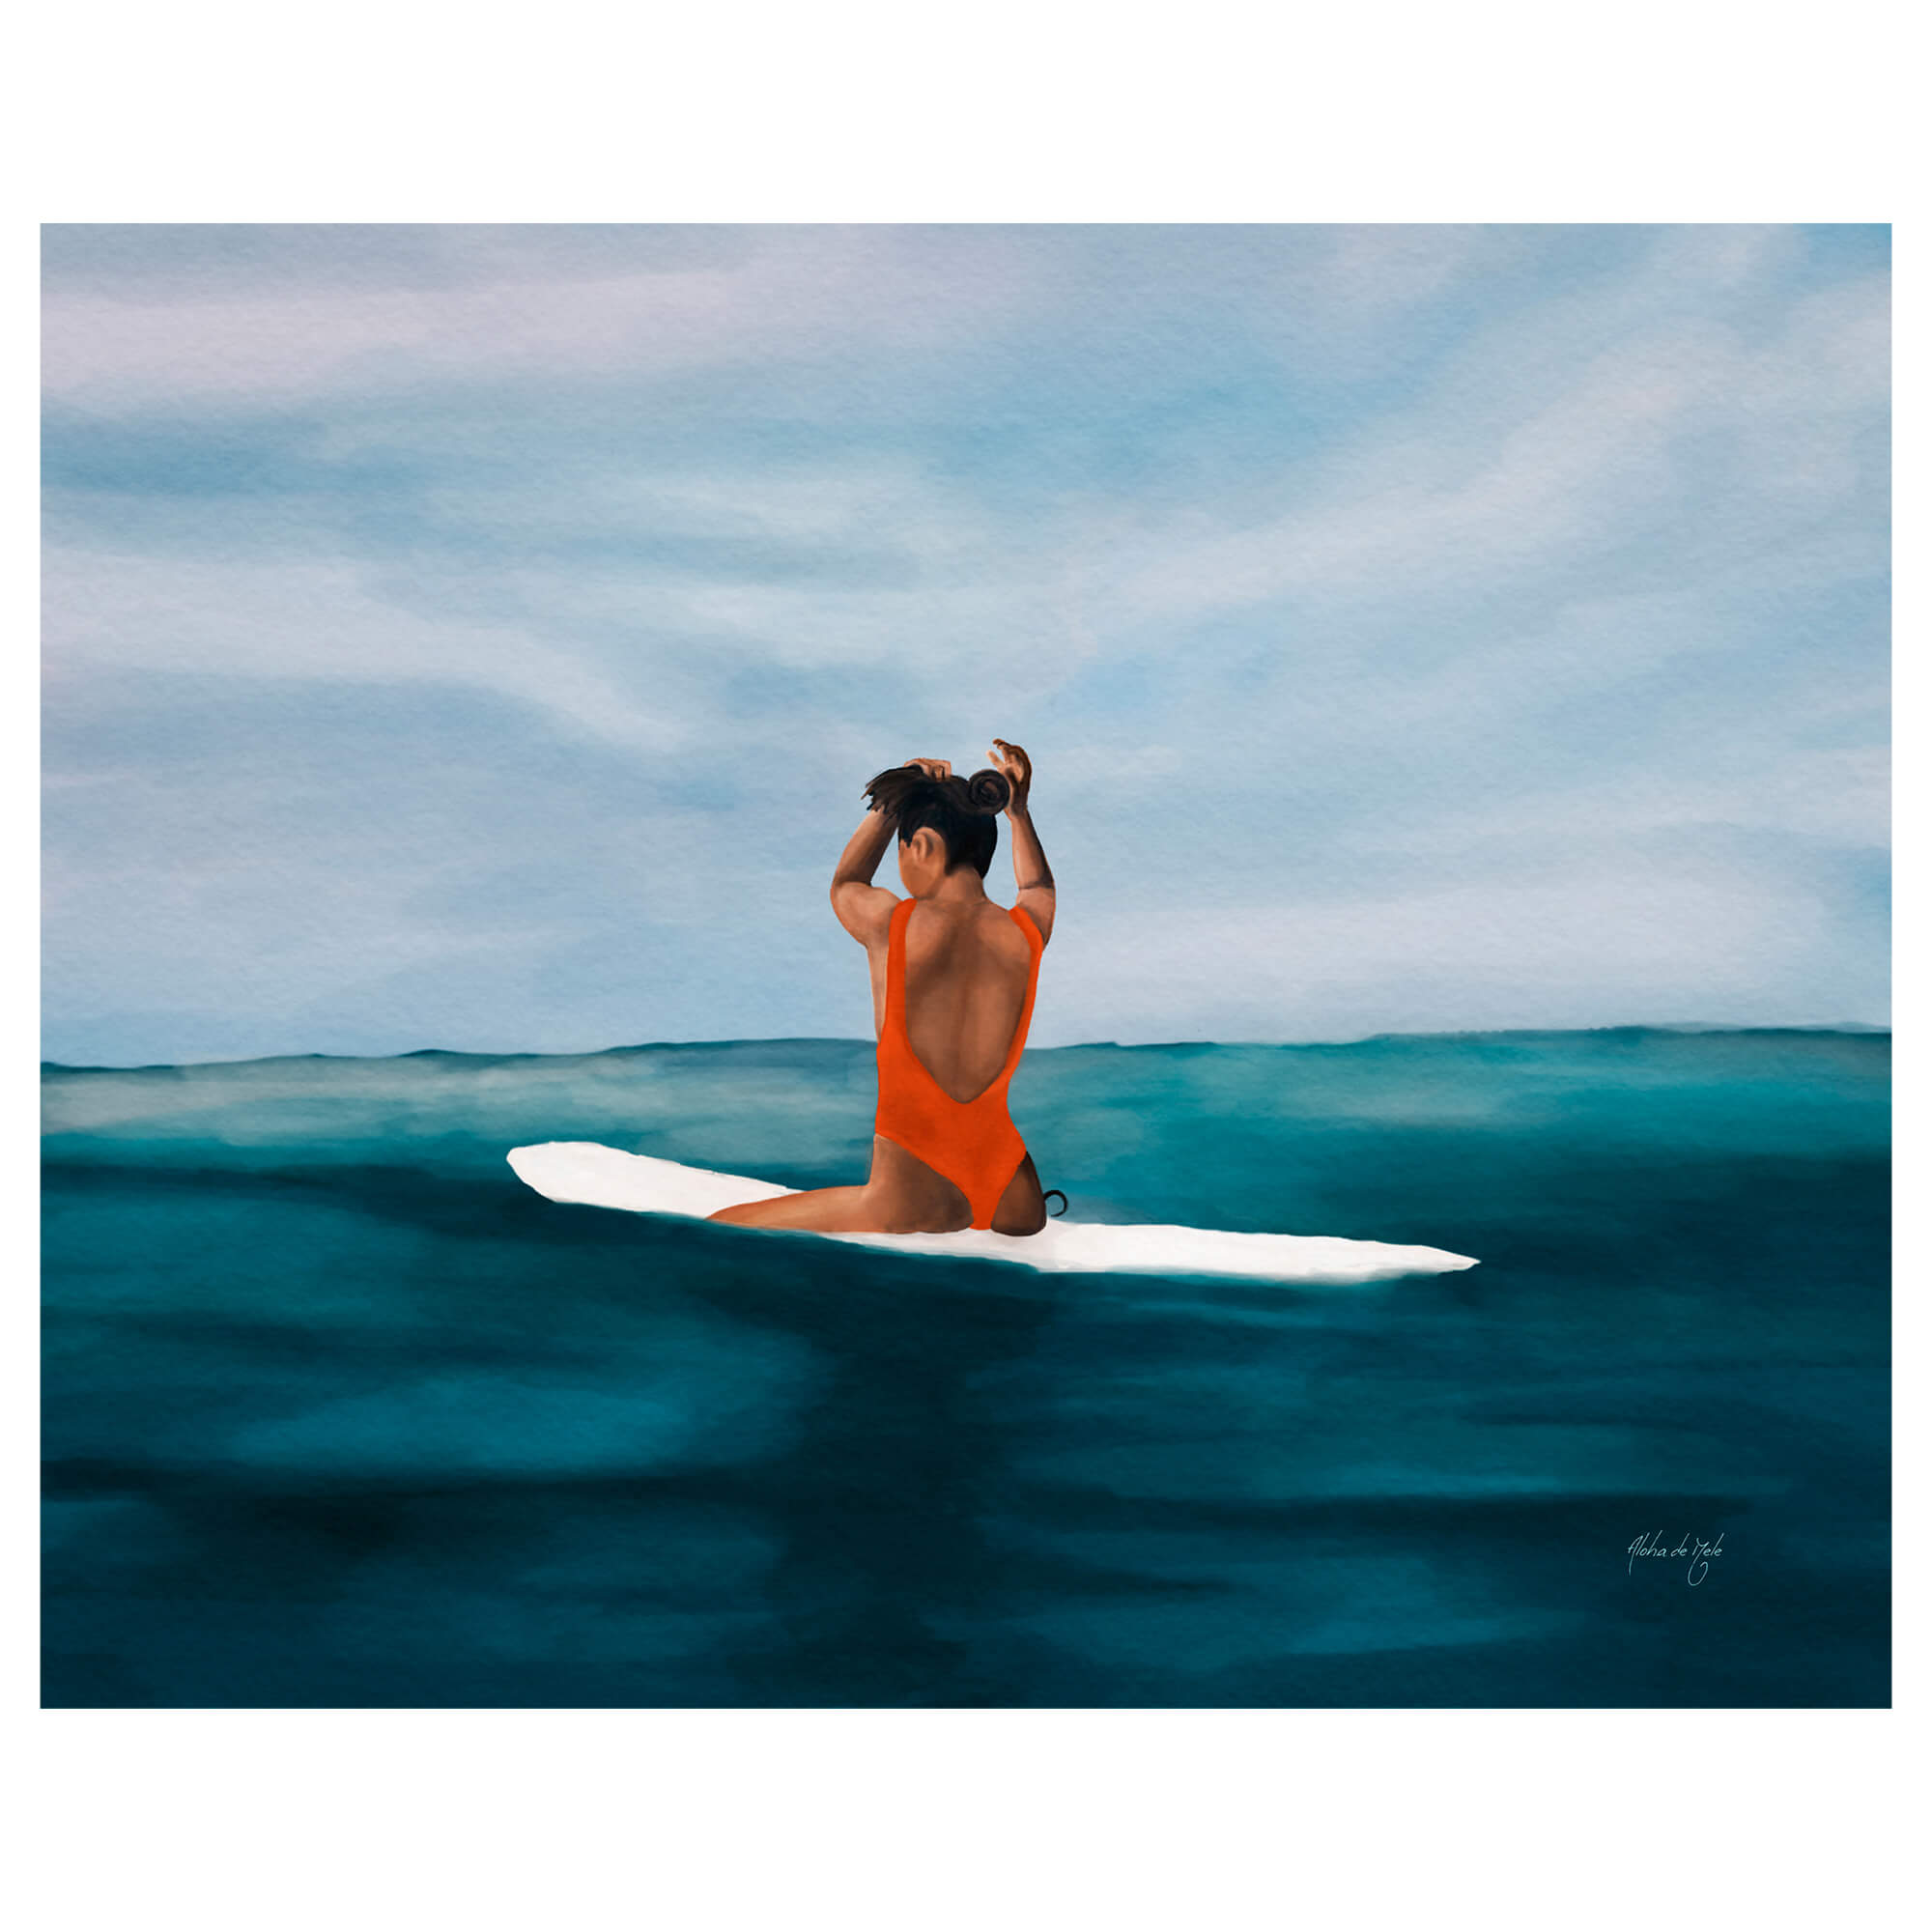 A matted art print of a woman peacefully surfing by Hawaii artist Aloha De Mele